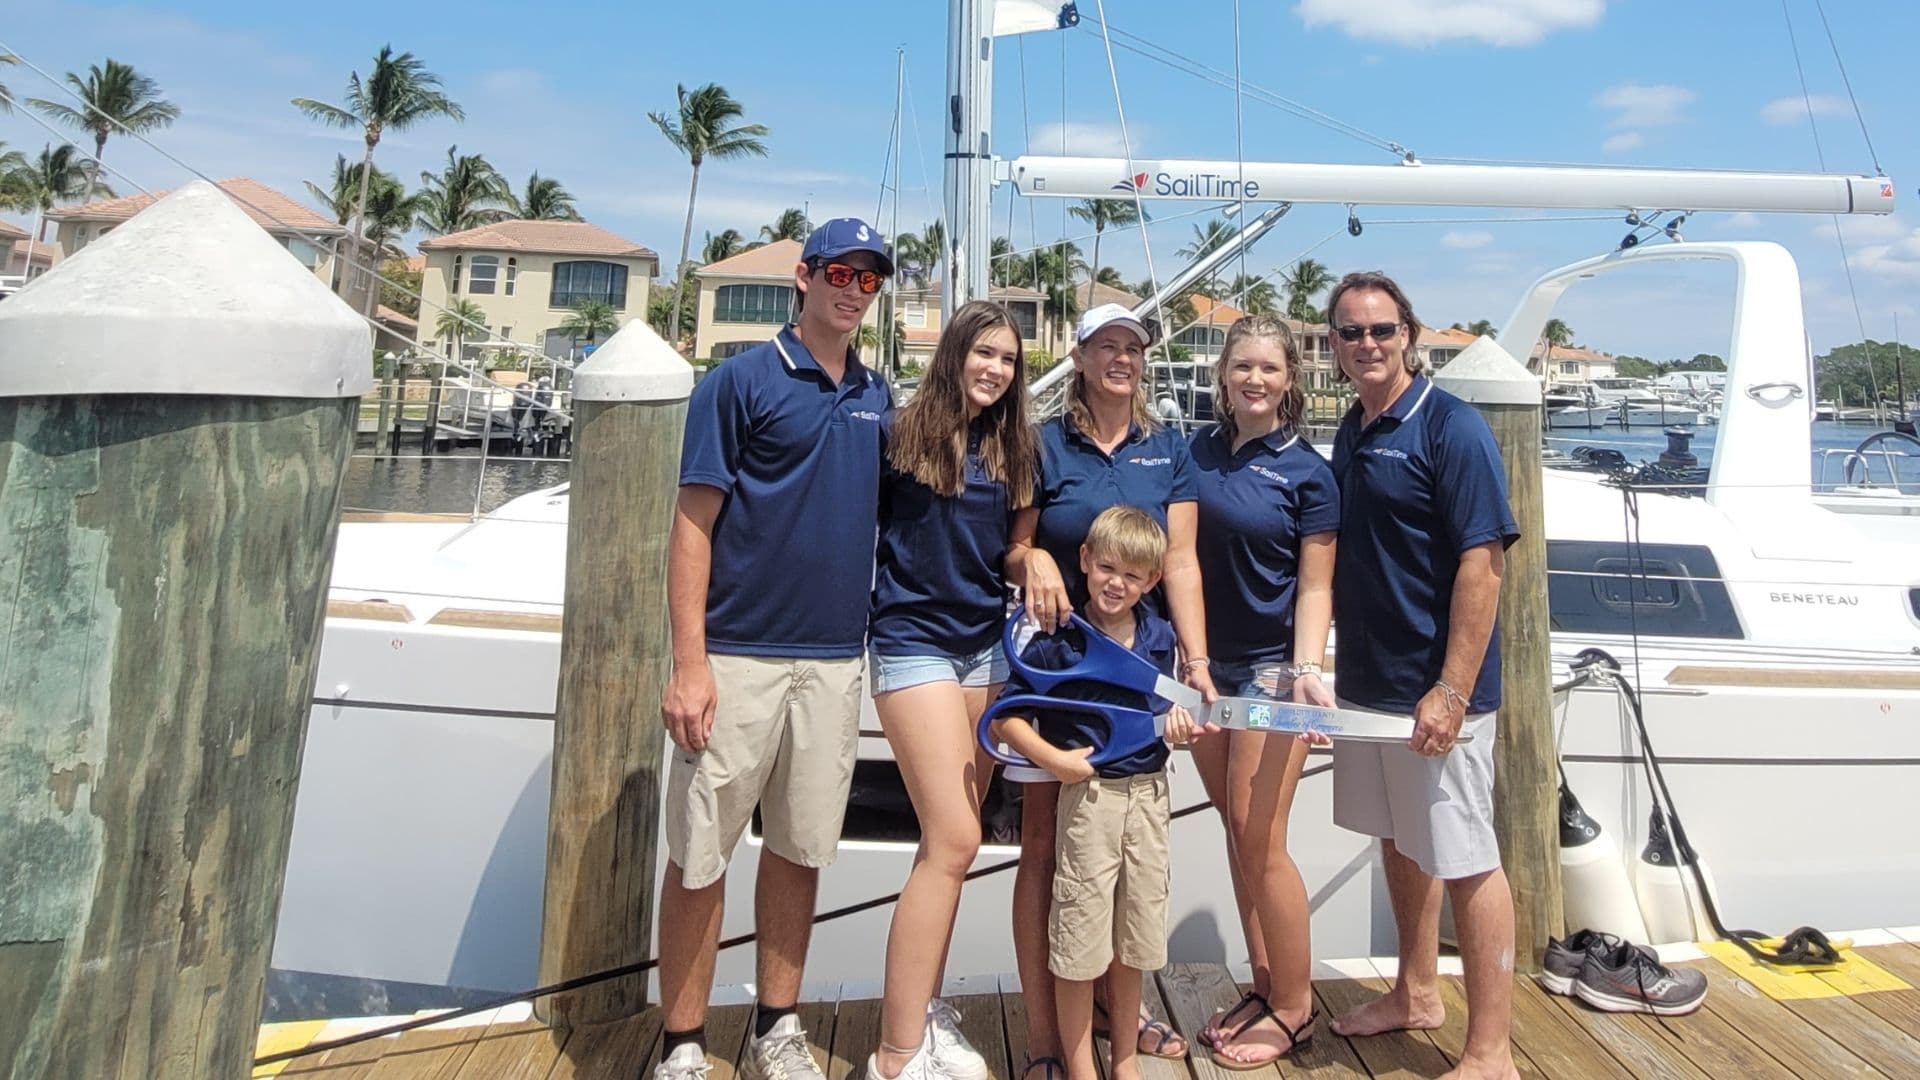 The Edwards Family at SailTime Southwest Florida Ribbon cutting.